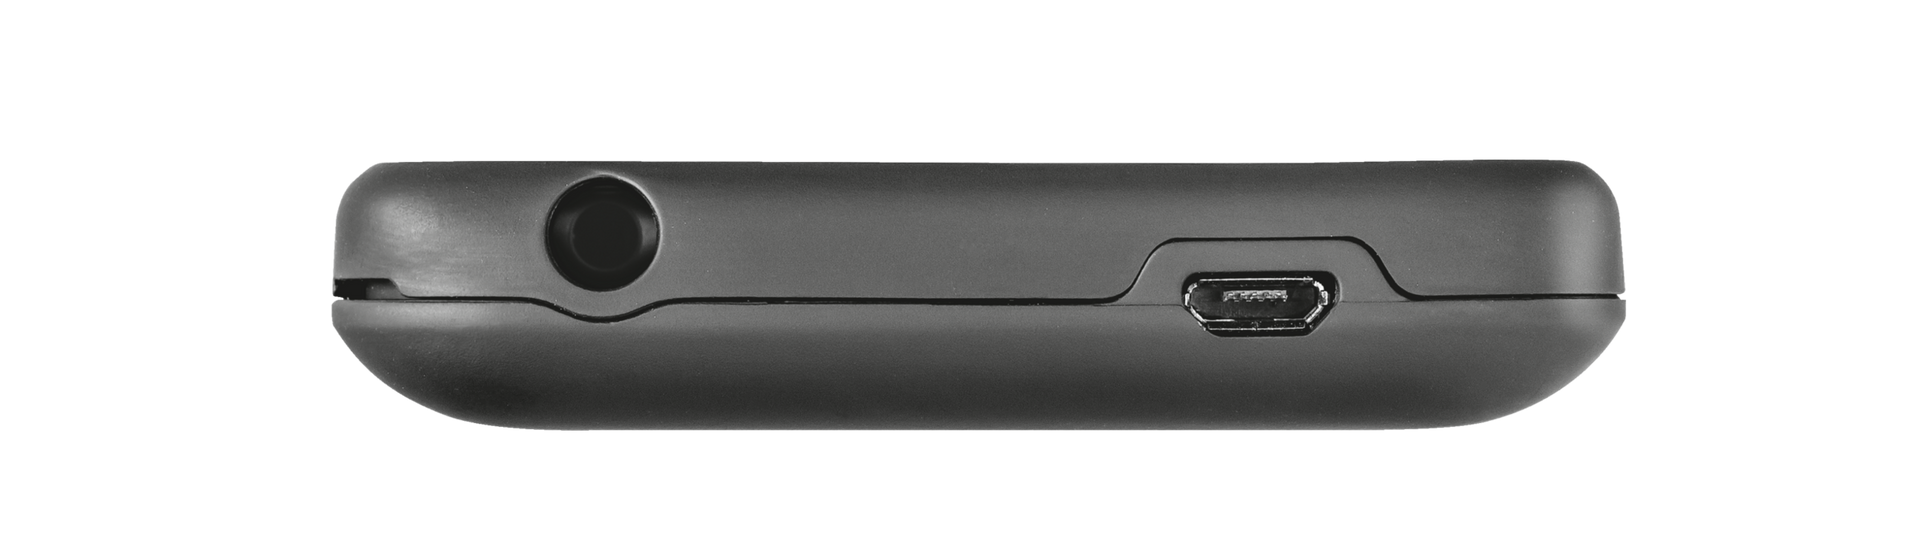 Batta Battery Case for iPhone 6 Plus / 6S Plus-Bottom